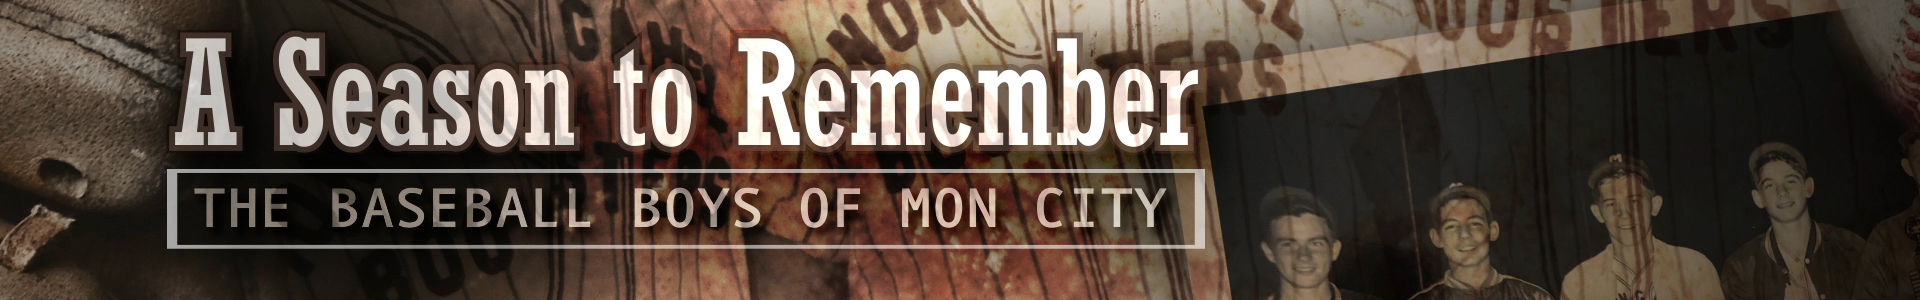 A Season to Remember: The Baseball Boys of Mon City